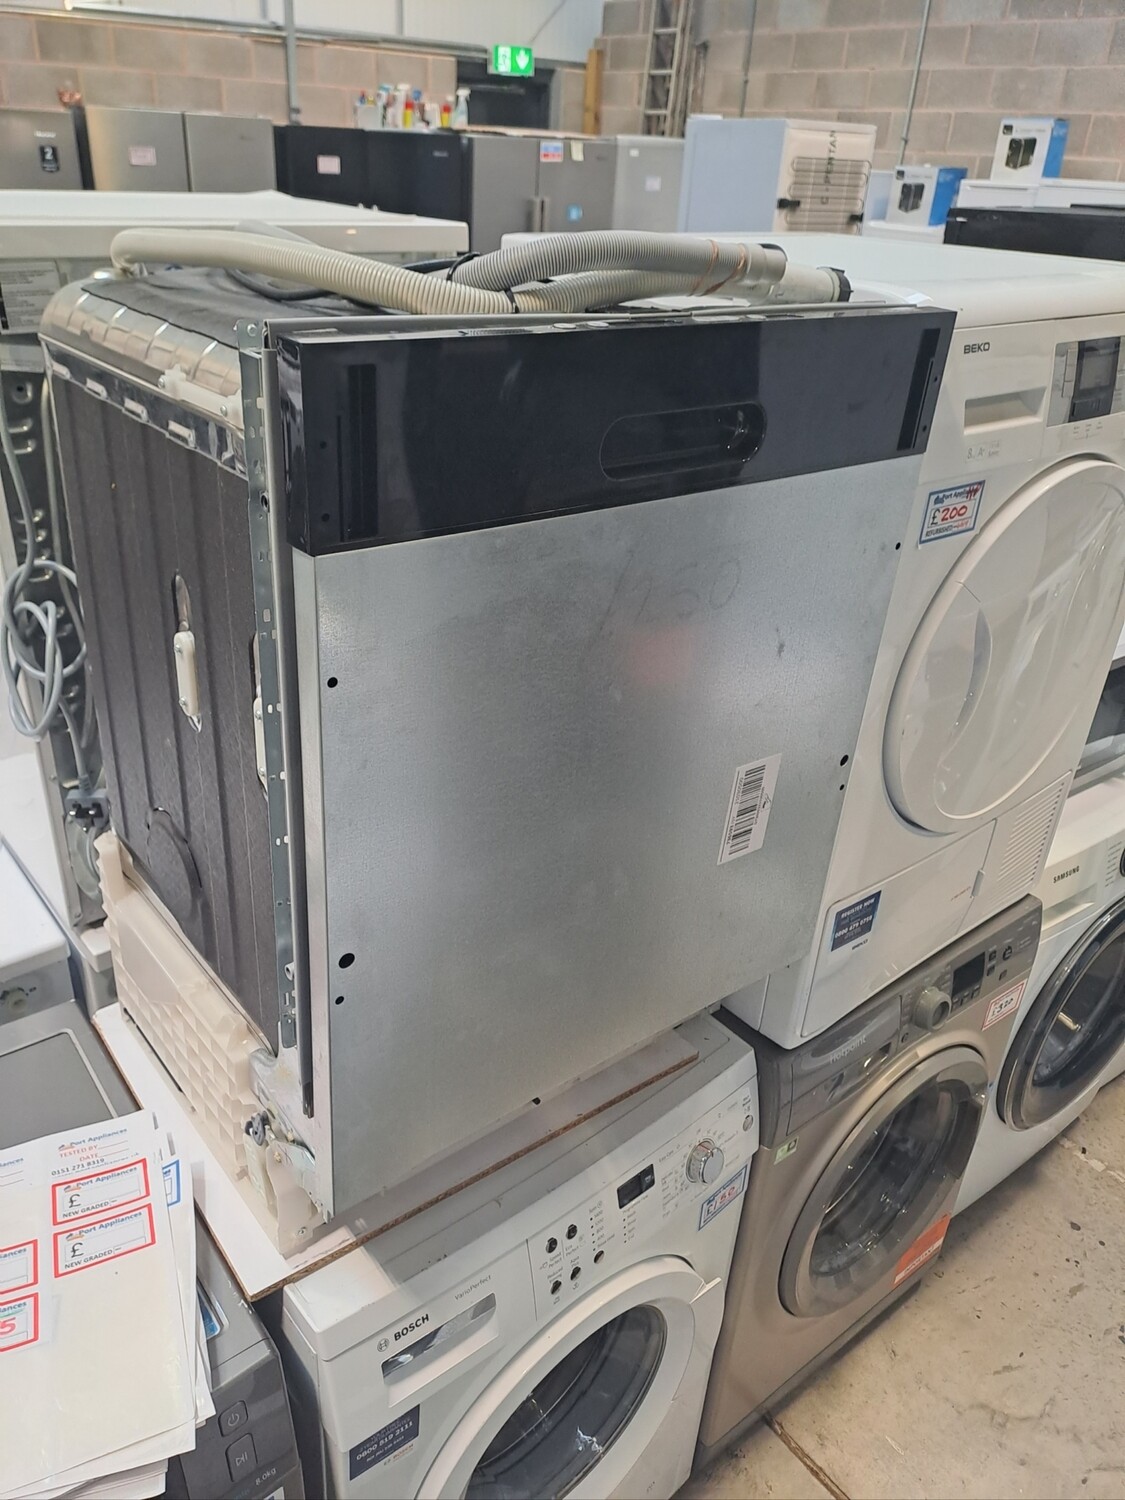 Hisense HV671C80UK Full Size 60cm Integrated Built In Dishwasher New Graded 12 Month Guarantee 